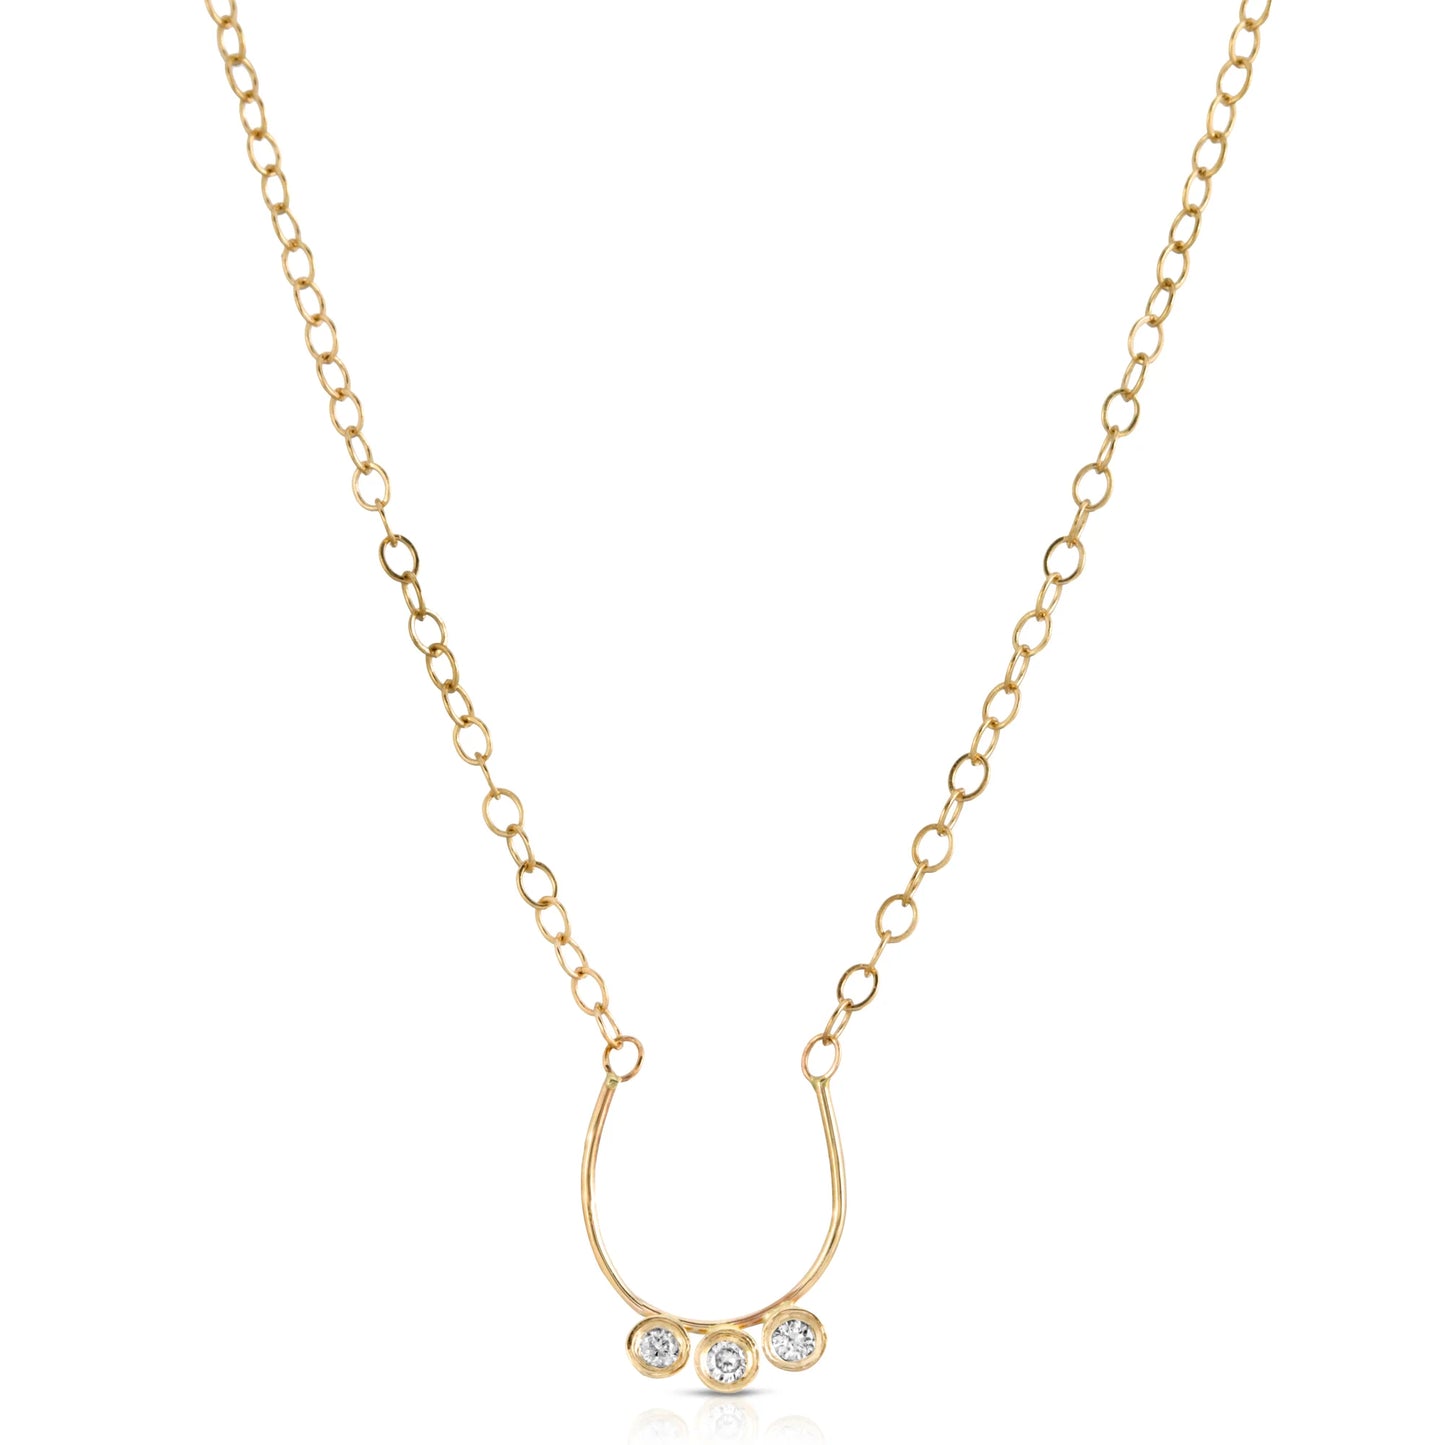 Danielle Morgan Jewelry - three diamond necklace